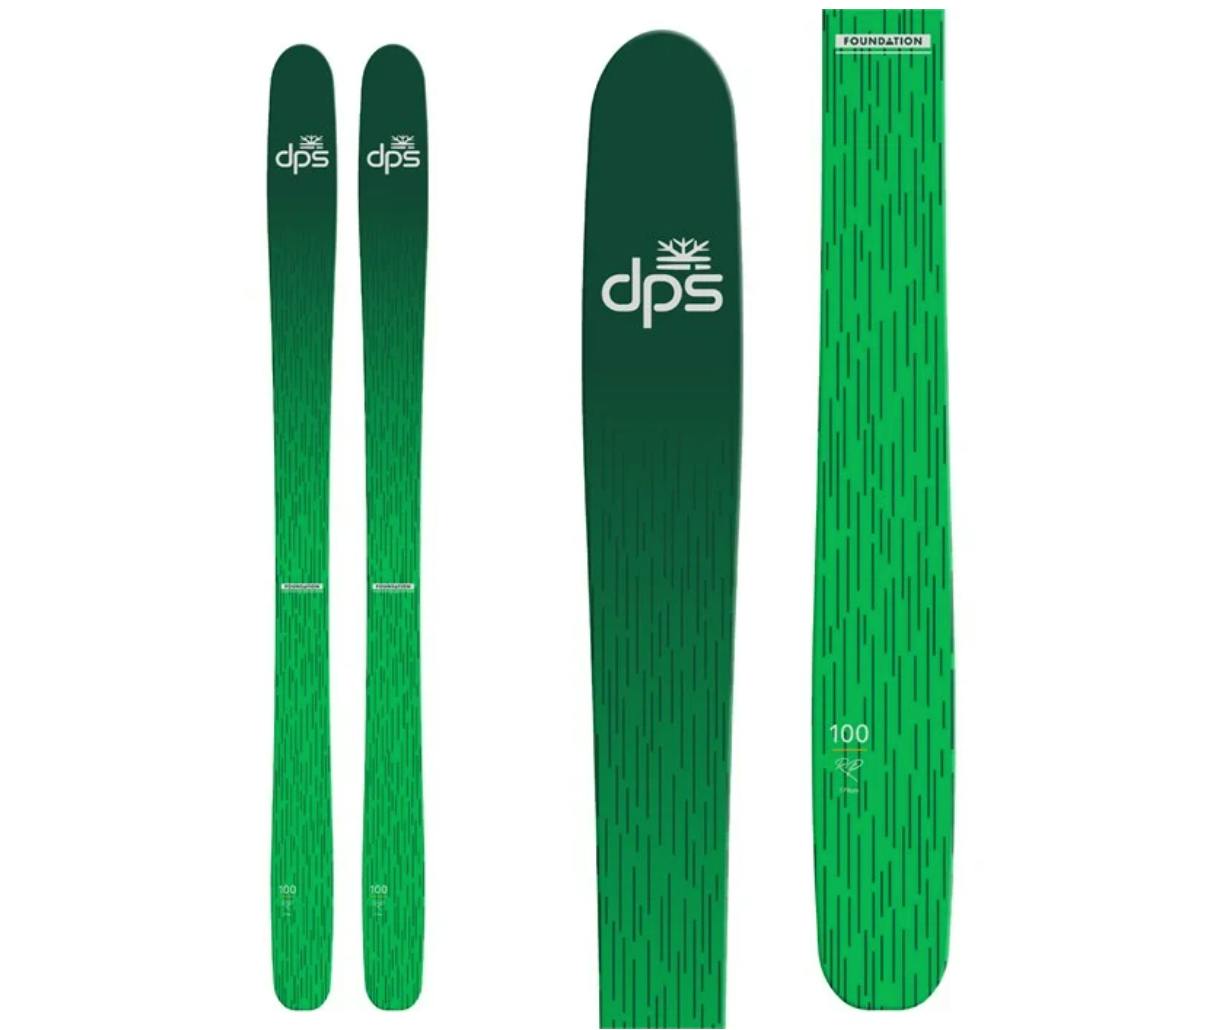 The DPS Foundation 100 RP ski. 